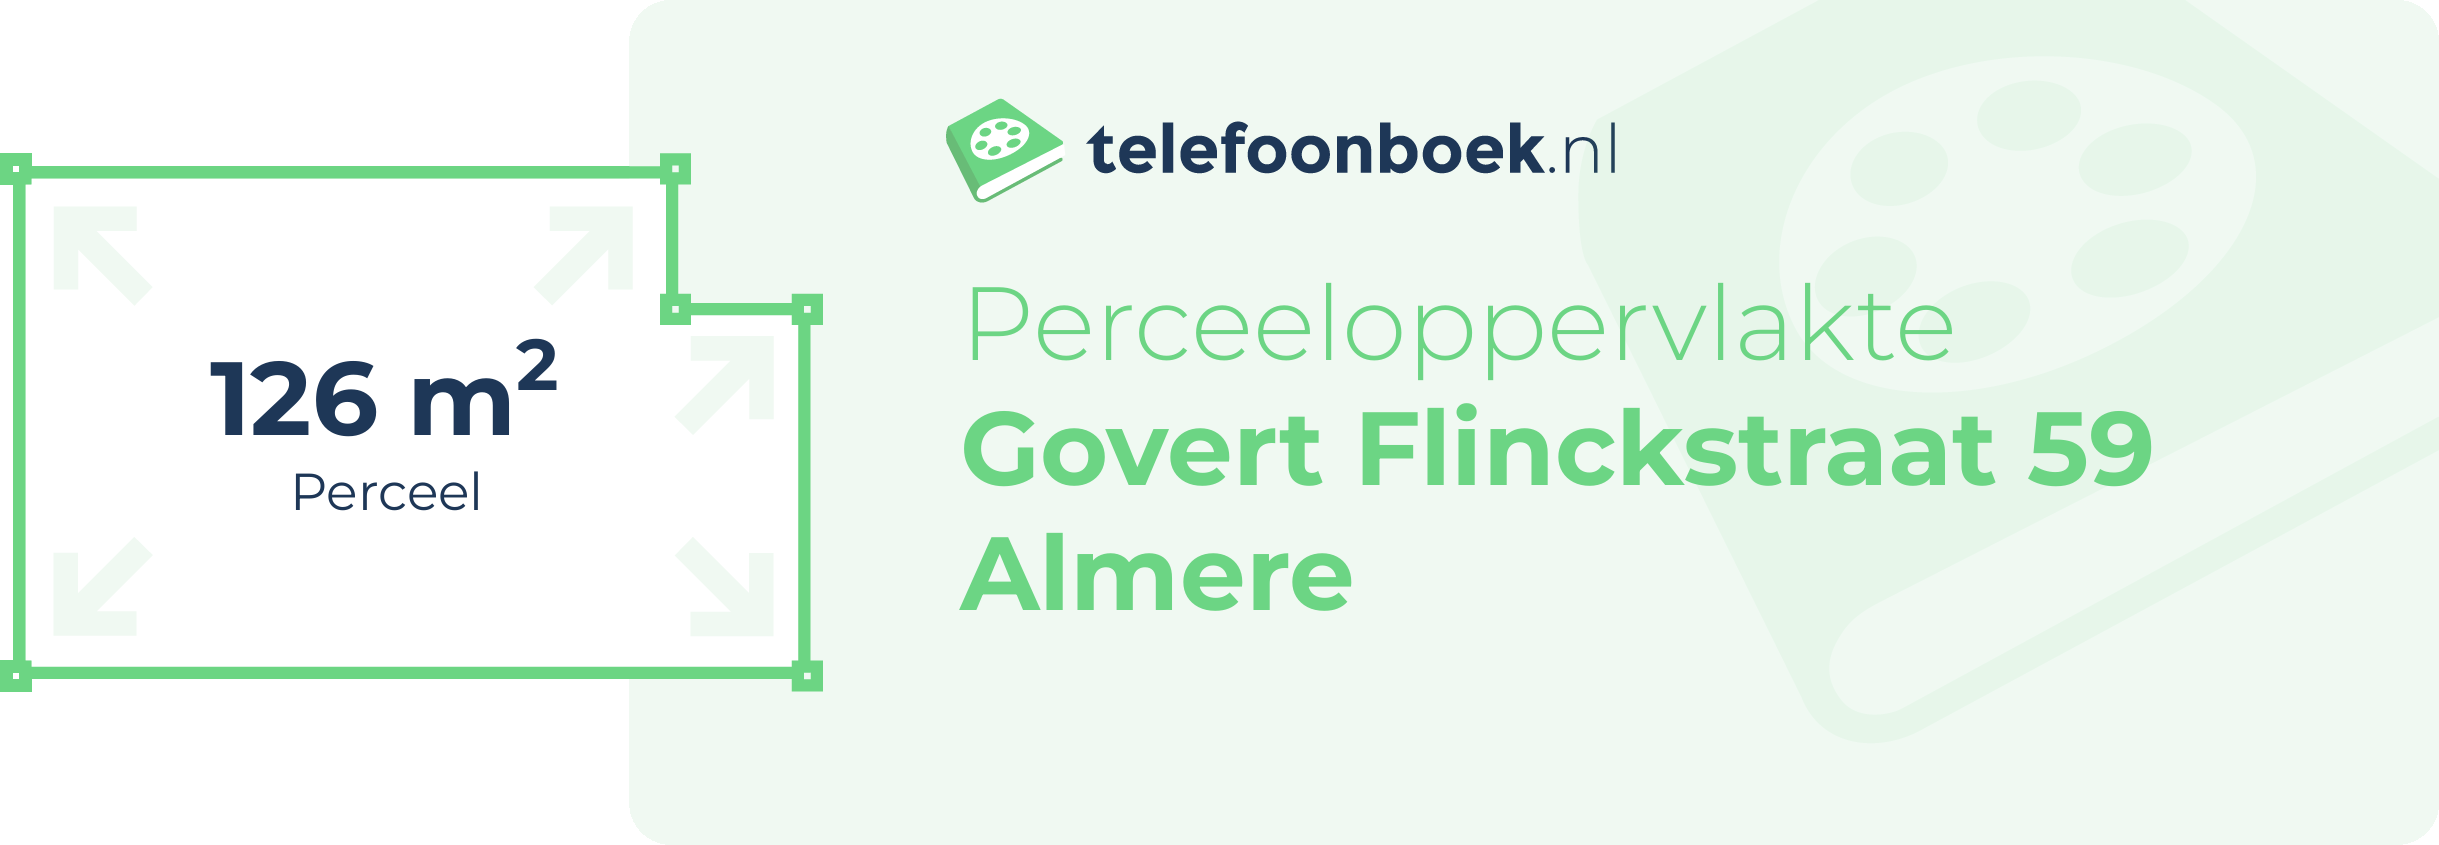 Perceeloppervlakte Govert Flinckstraat 59 Almere